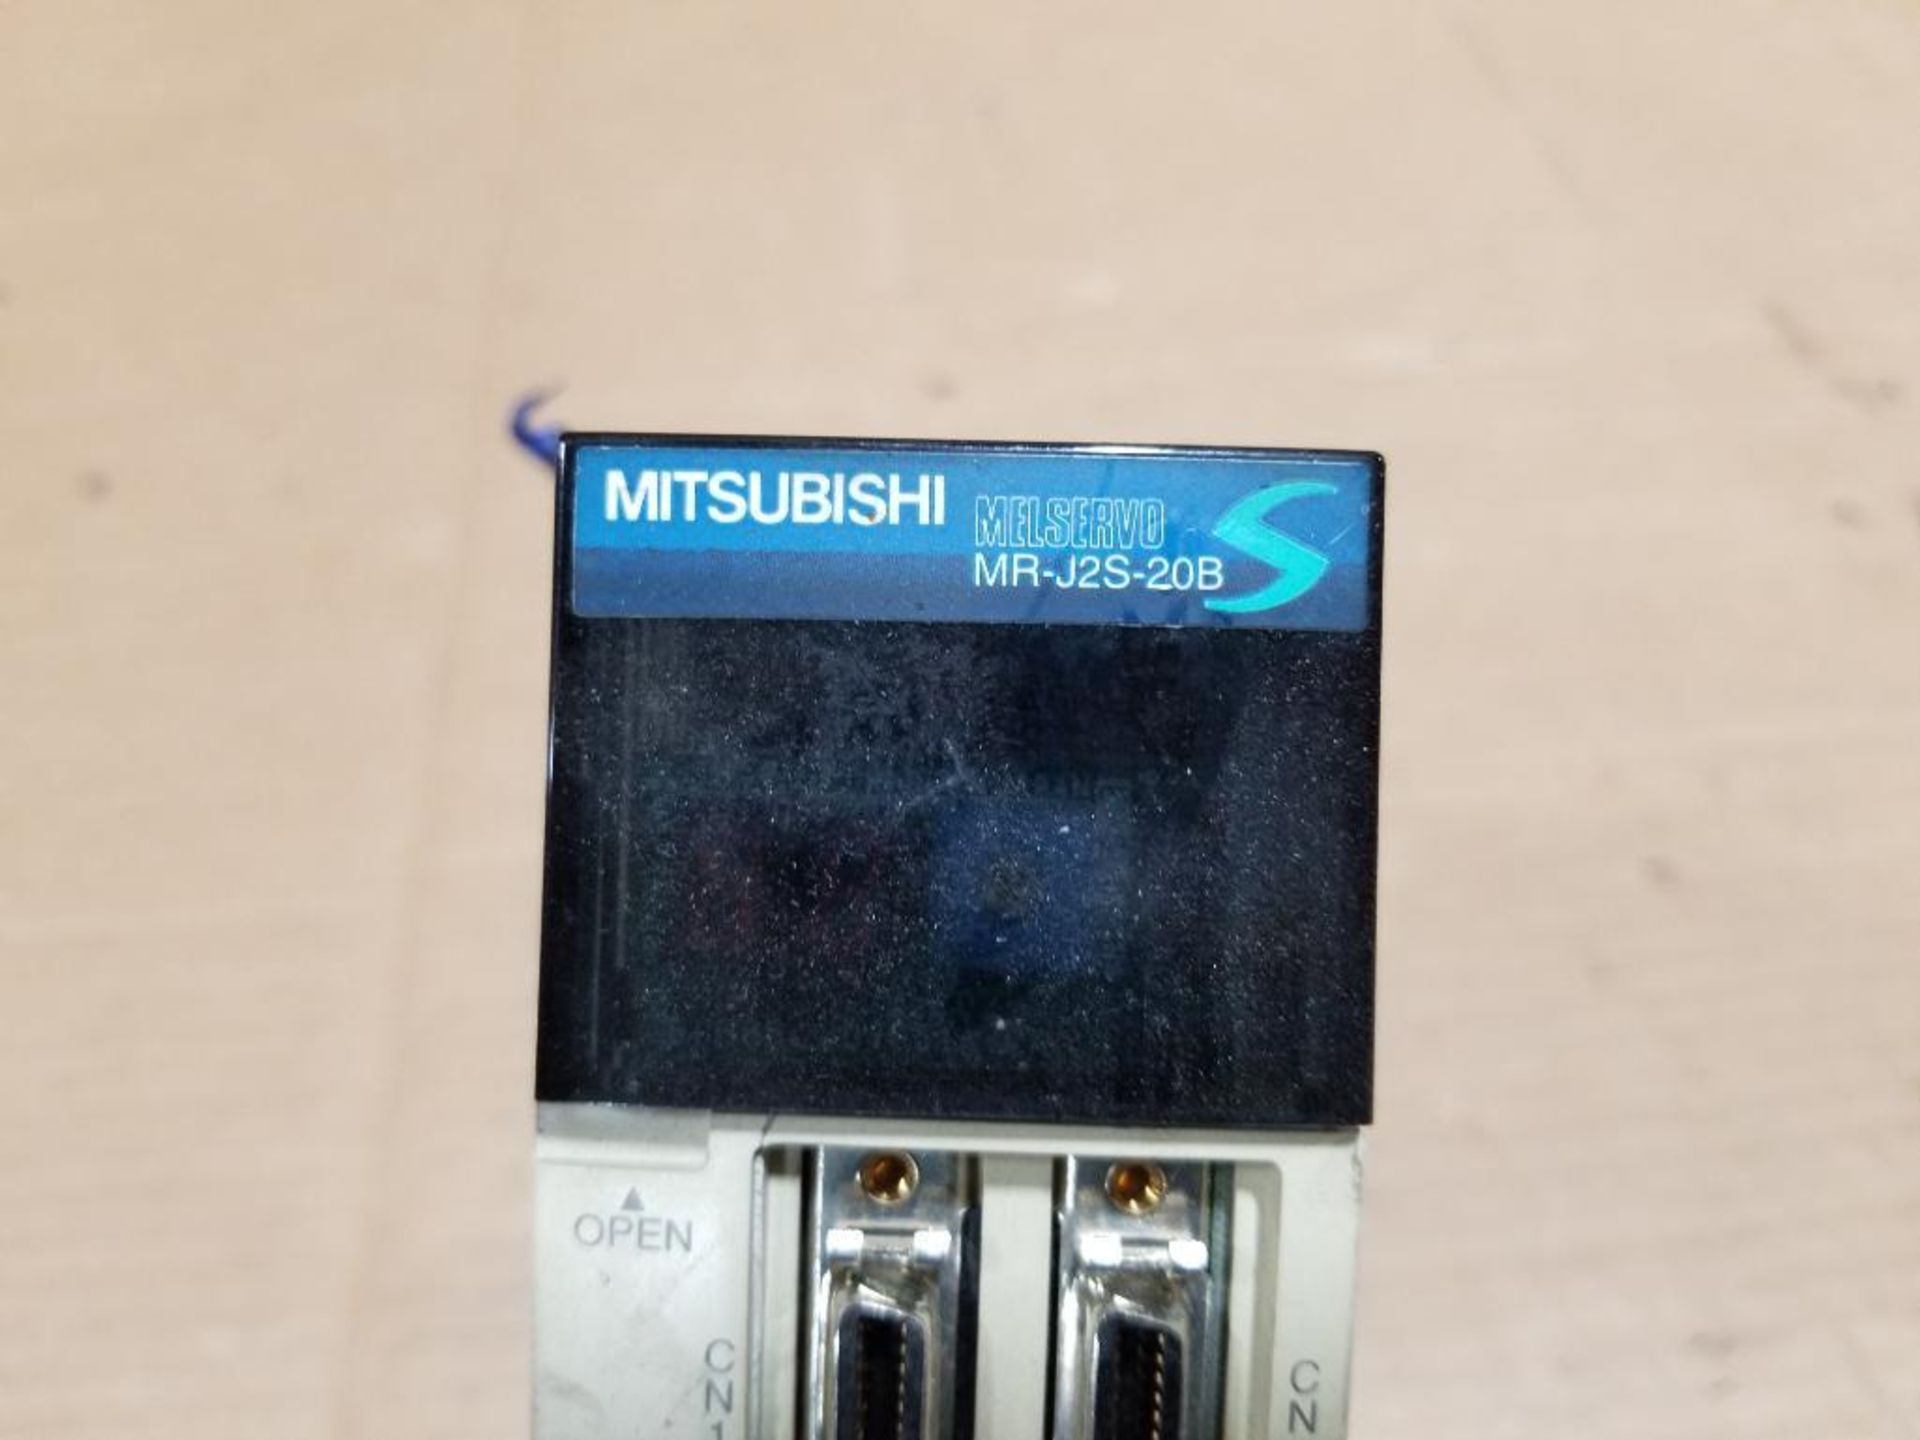 Qty 2 - Mitsubishi drives. - Image 4 of 6